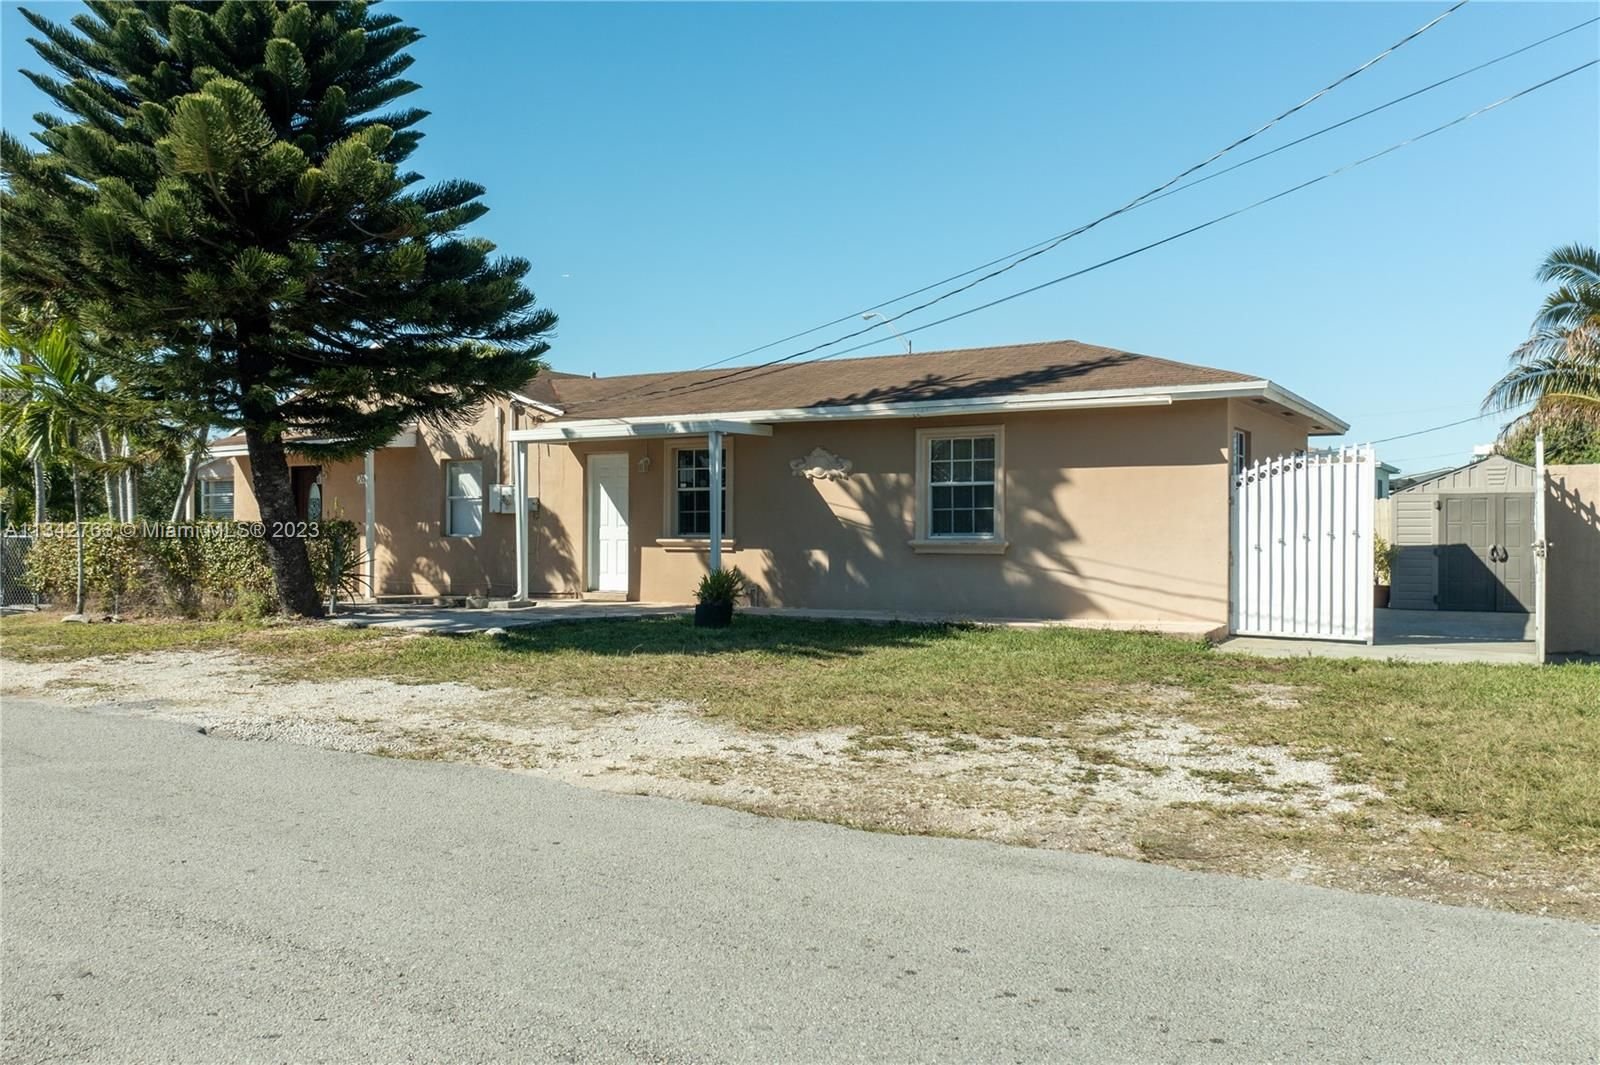 Real estate property located at 2633 67th Ave, Miami-Dade County, Miami, FL